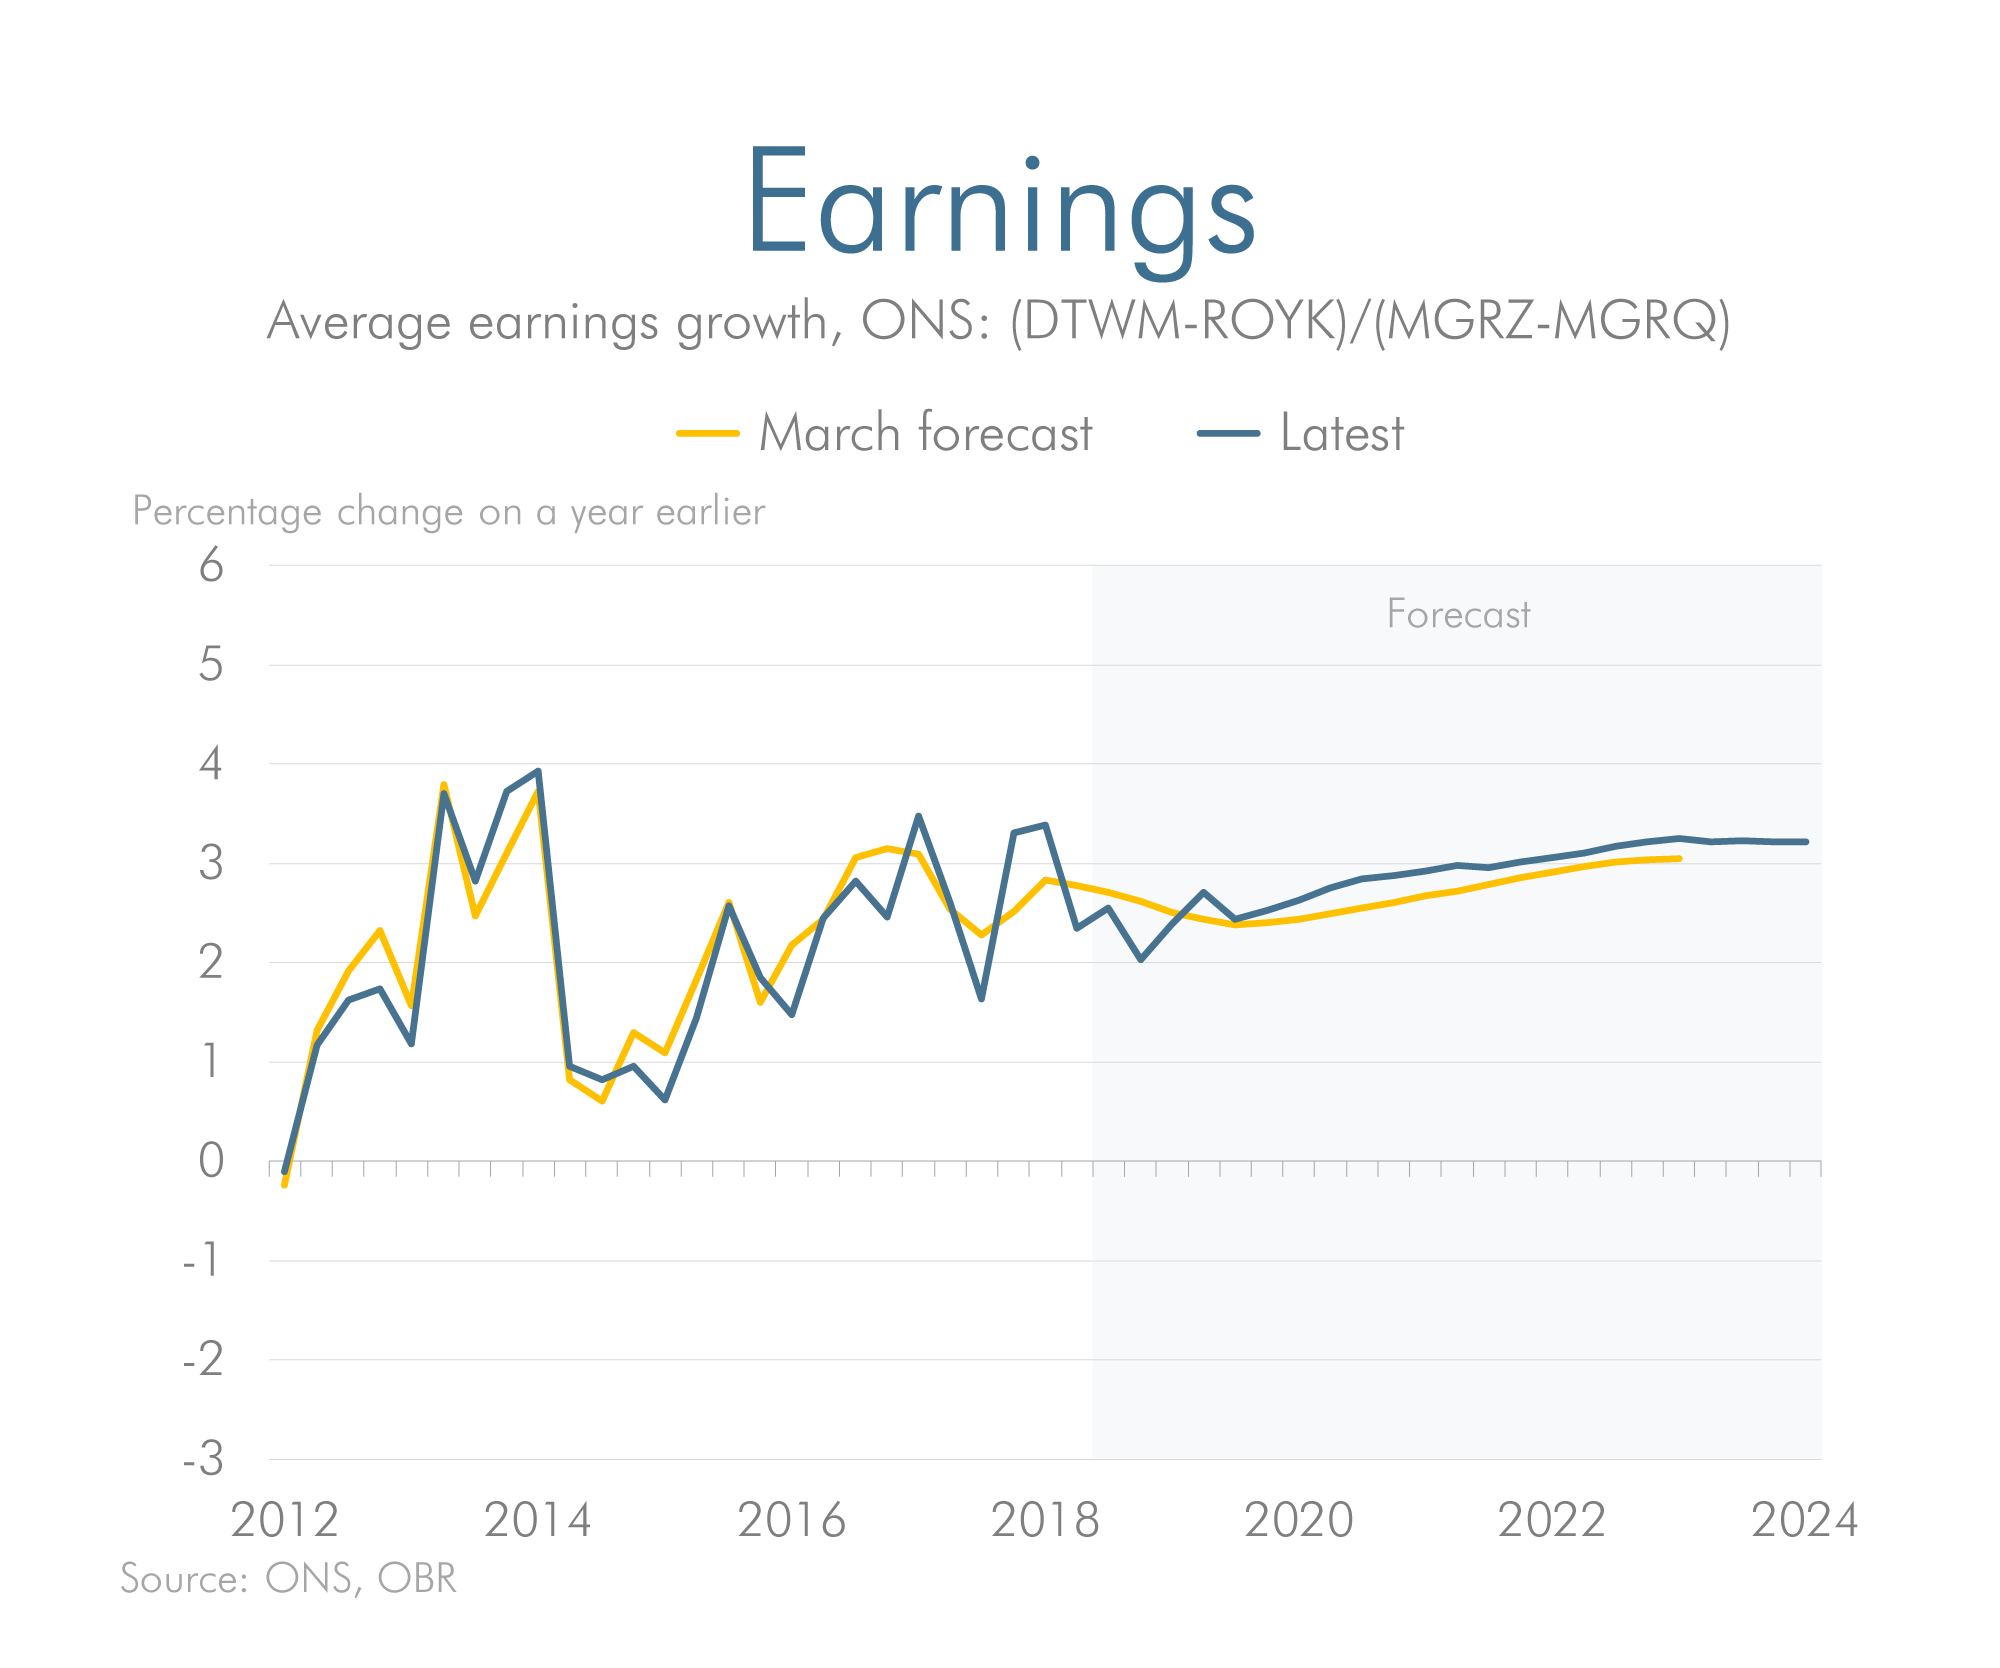 Earnings previous vs latest forecast